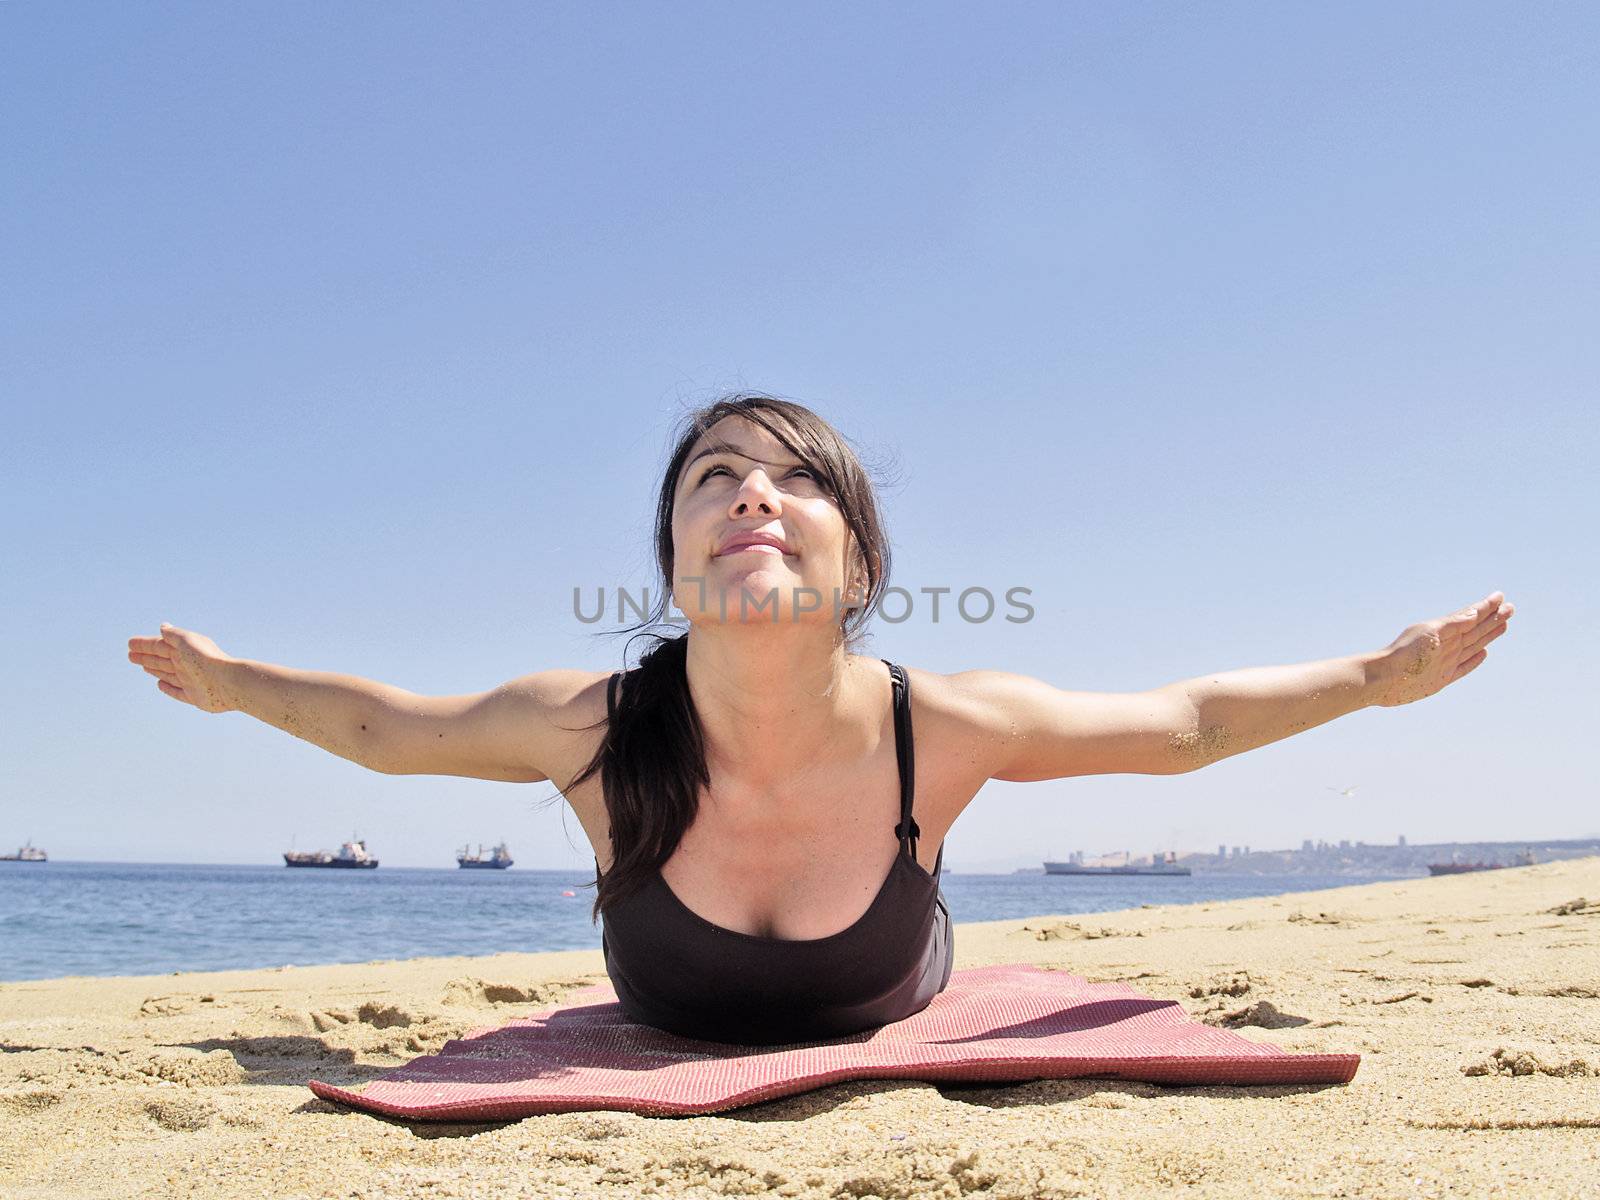 Yoga teacher practising at the beach pose paorna salabhasana